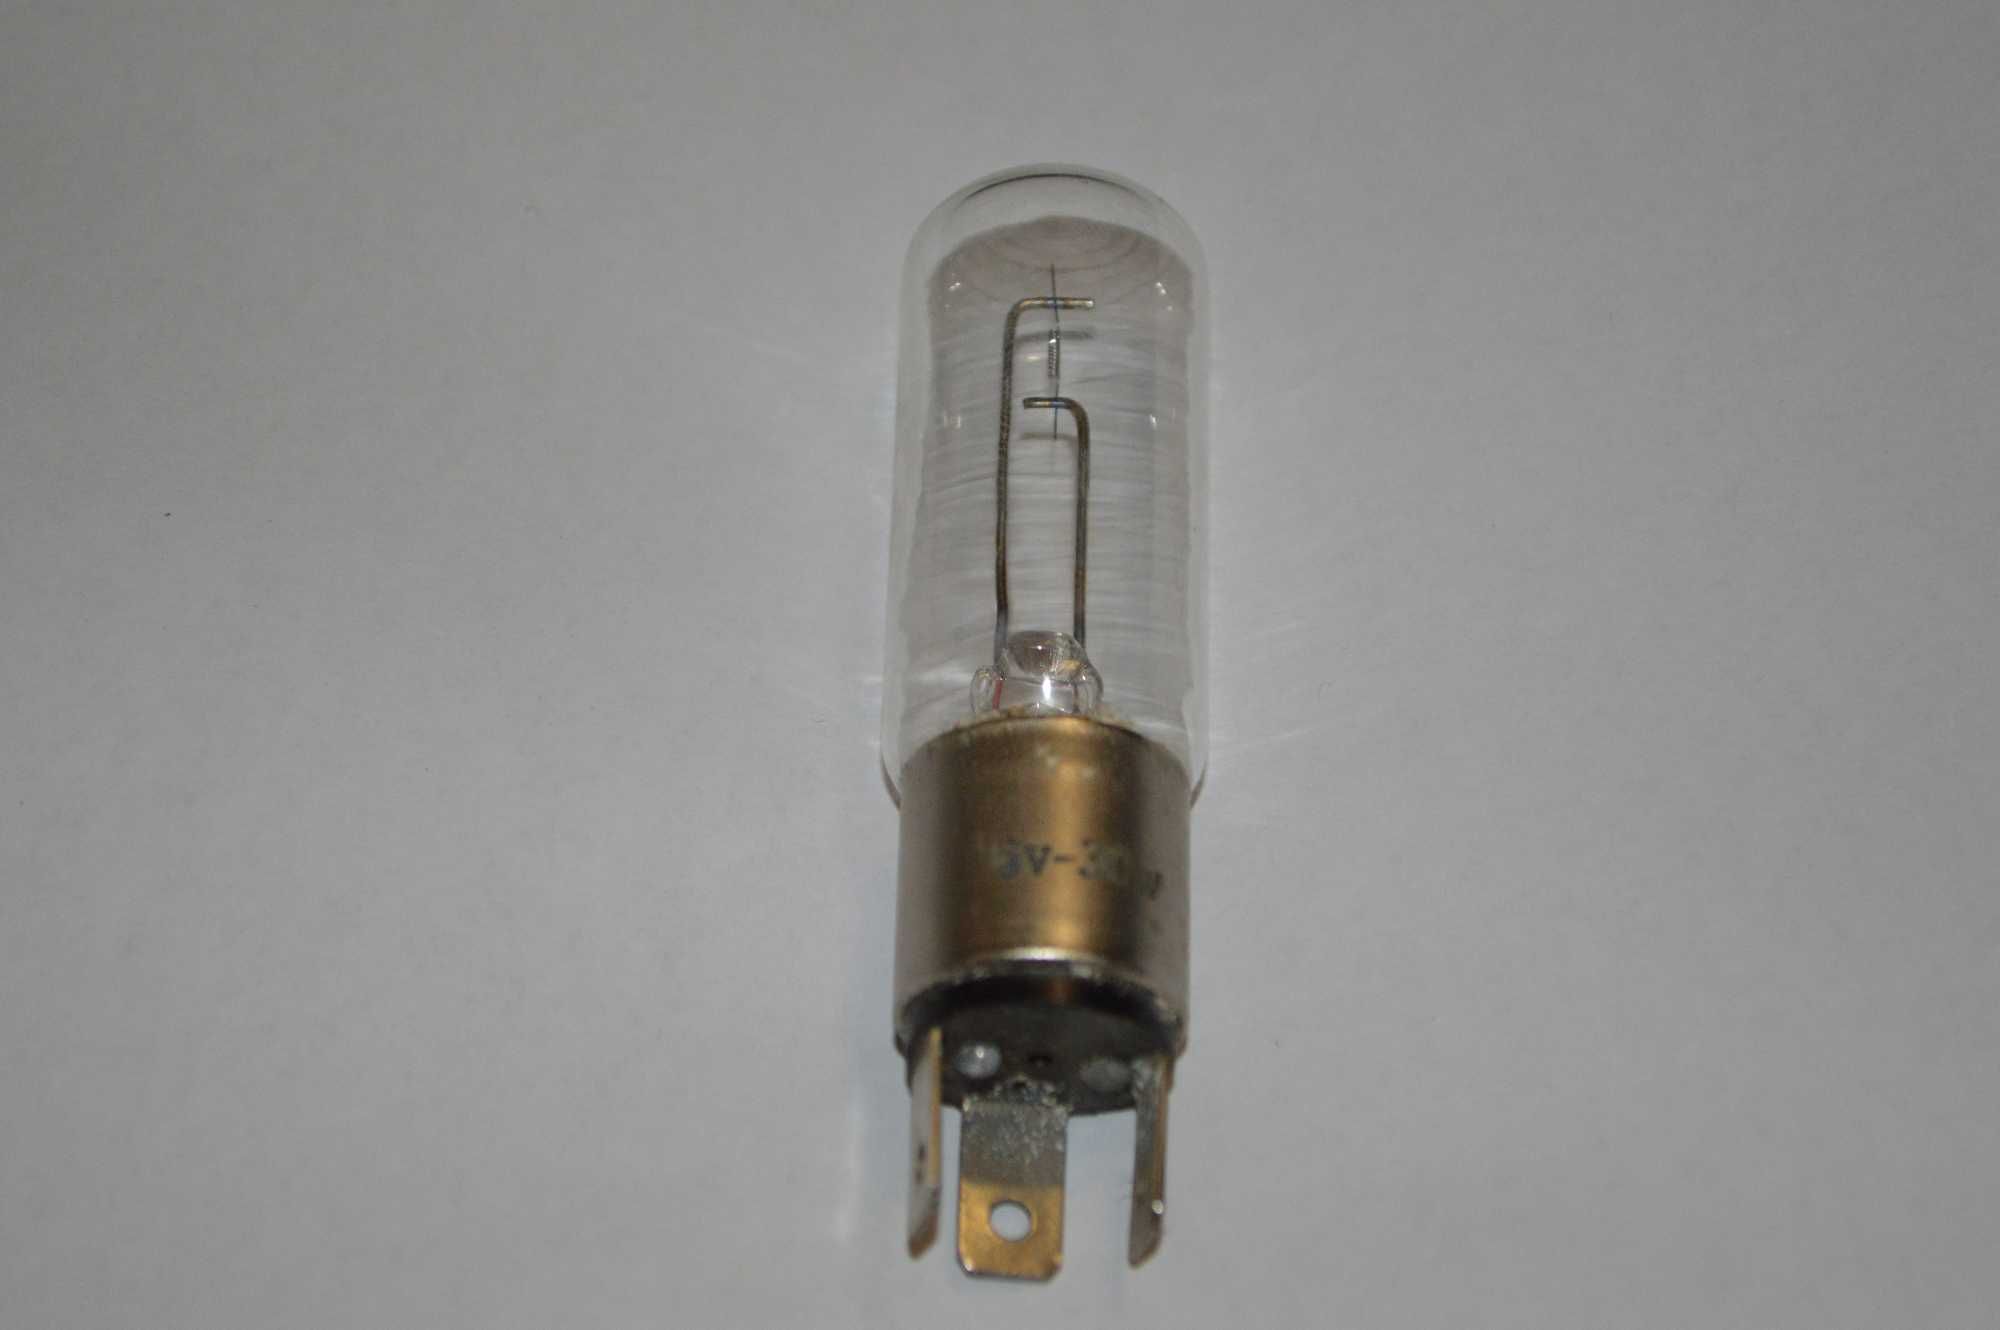 Bec microscop  -  microscope bulb